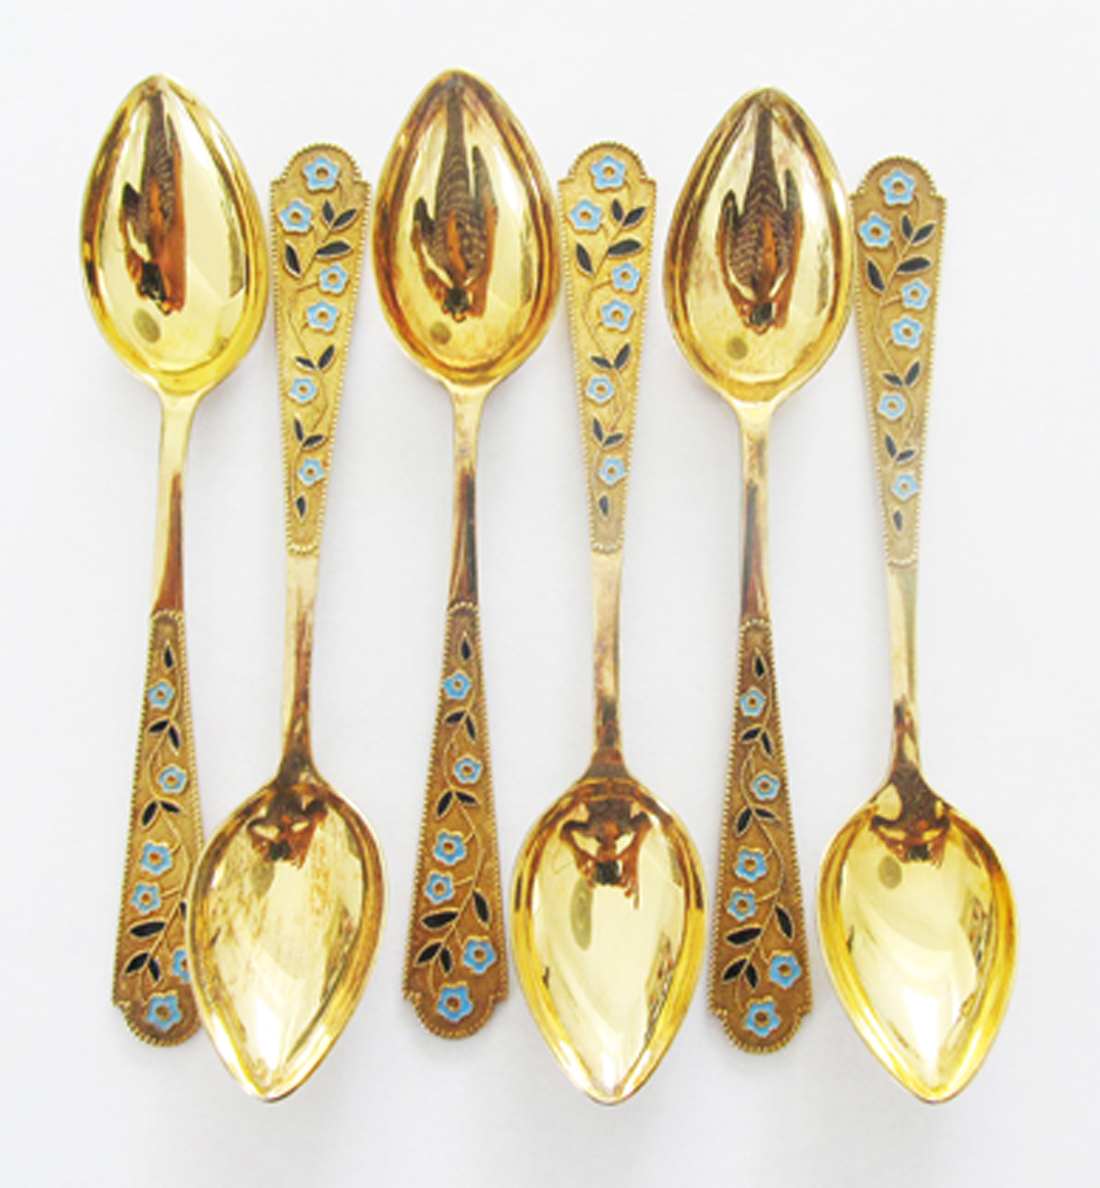 Russian-silver-gilt-and-enamel-dessert-spoons-Leningrad-1930s-offere...